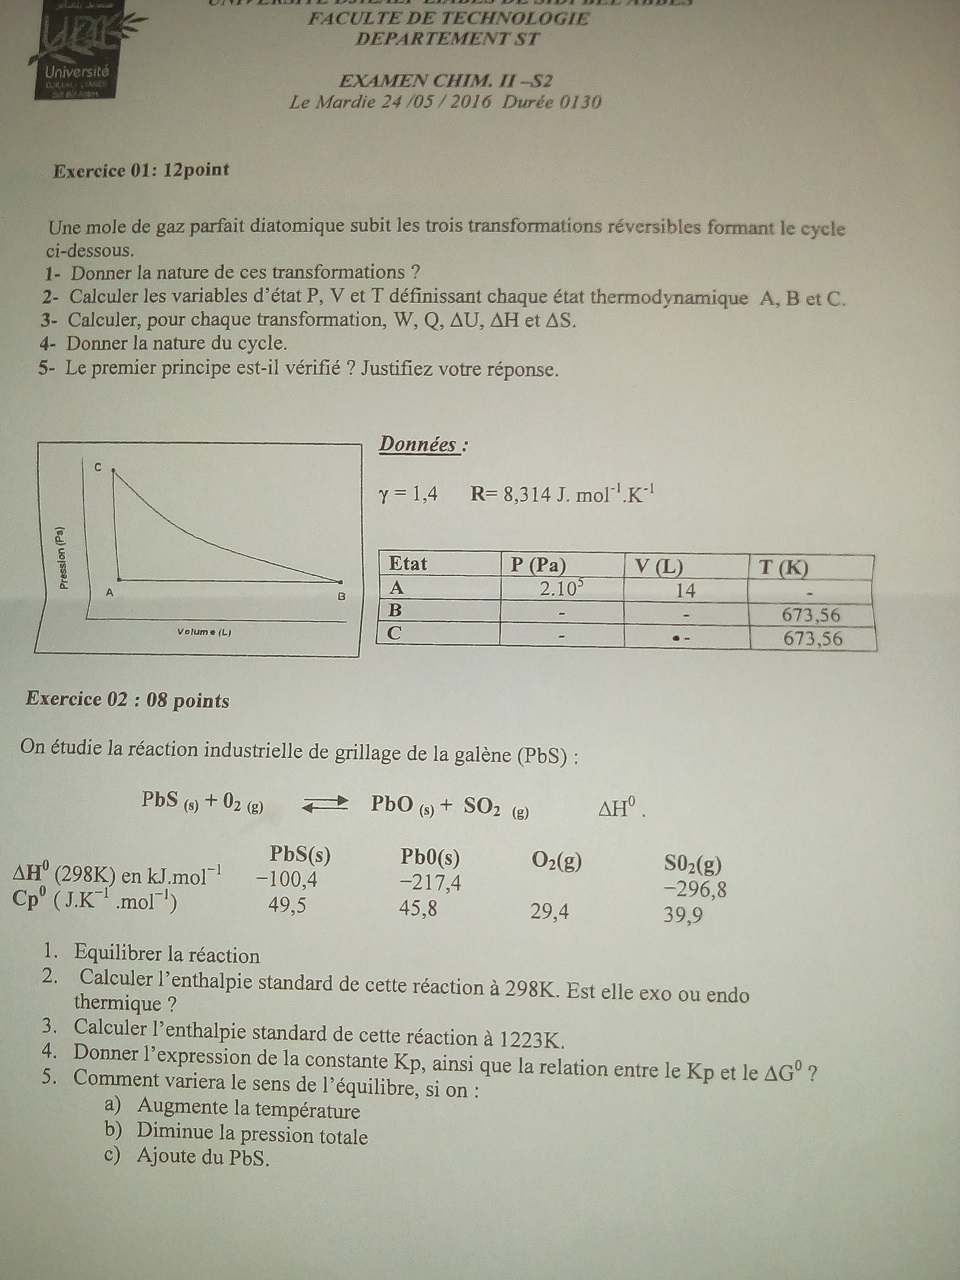 examen chimie 2 - espace-etudiant.net.jpg